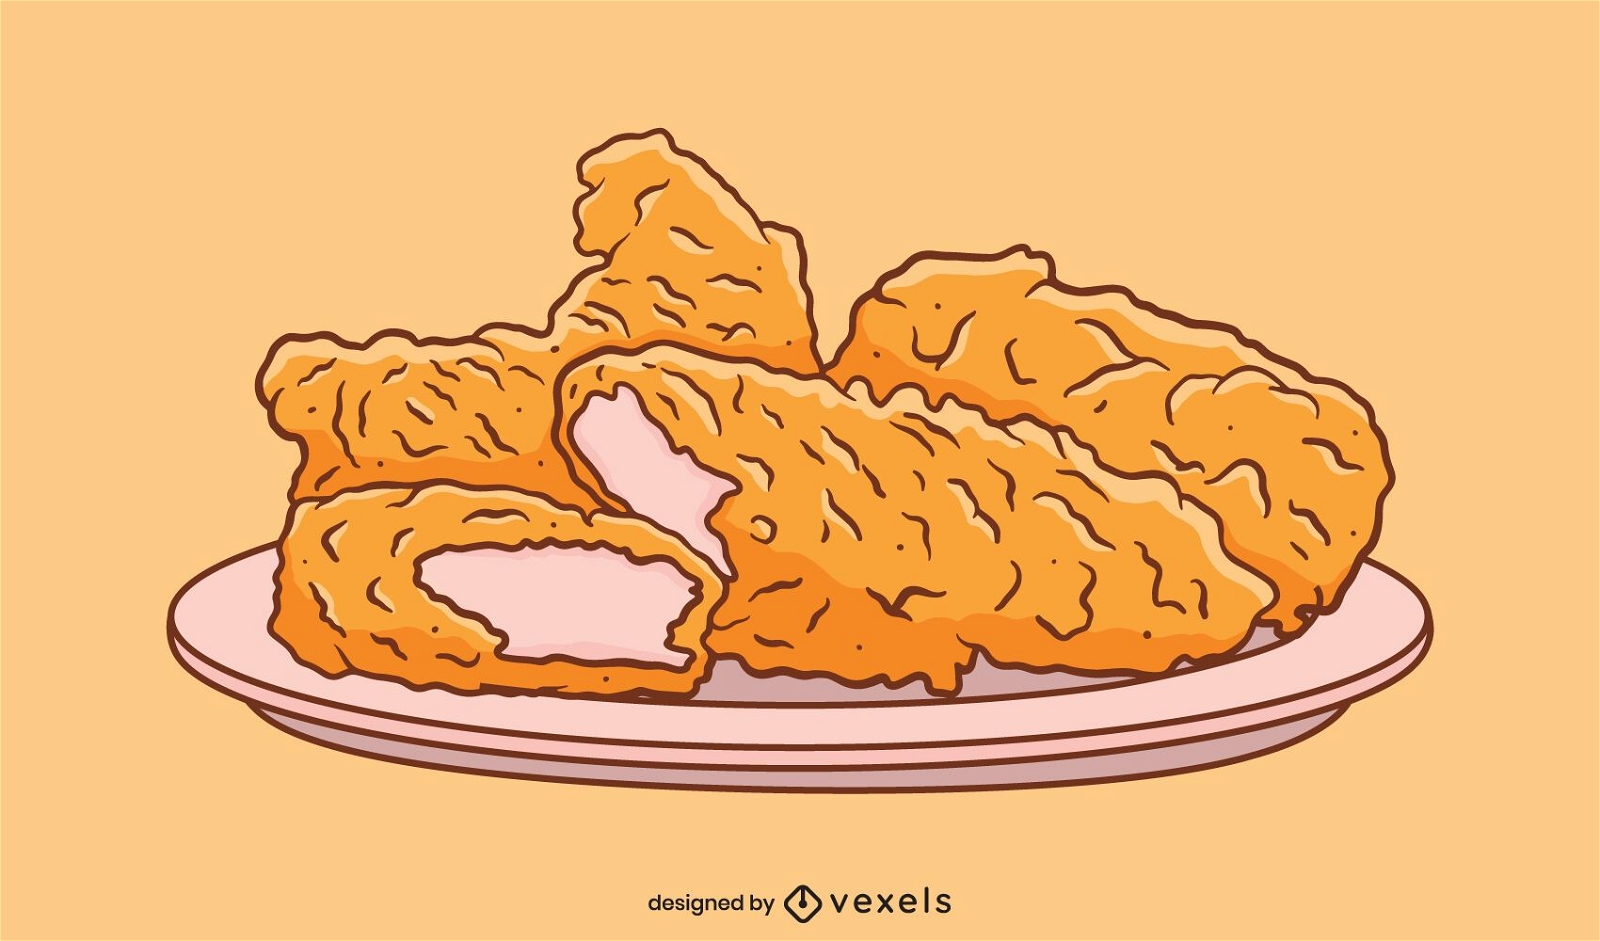 Chicken fingers plate illustration